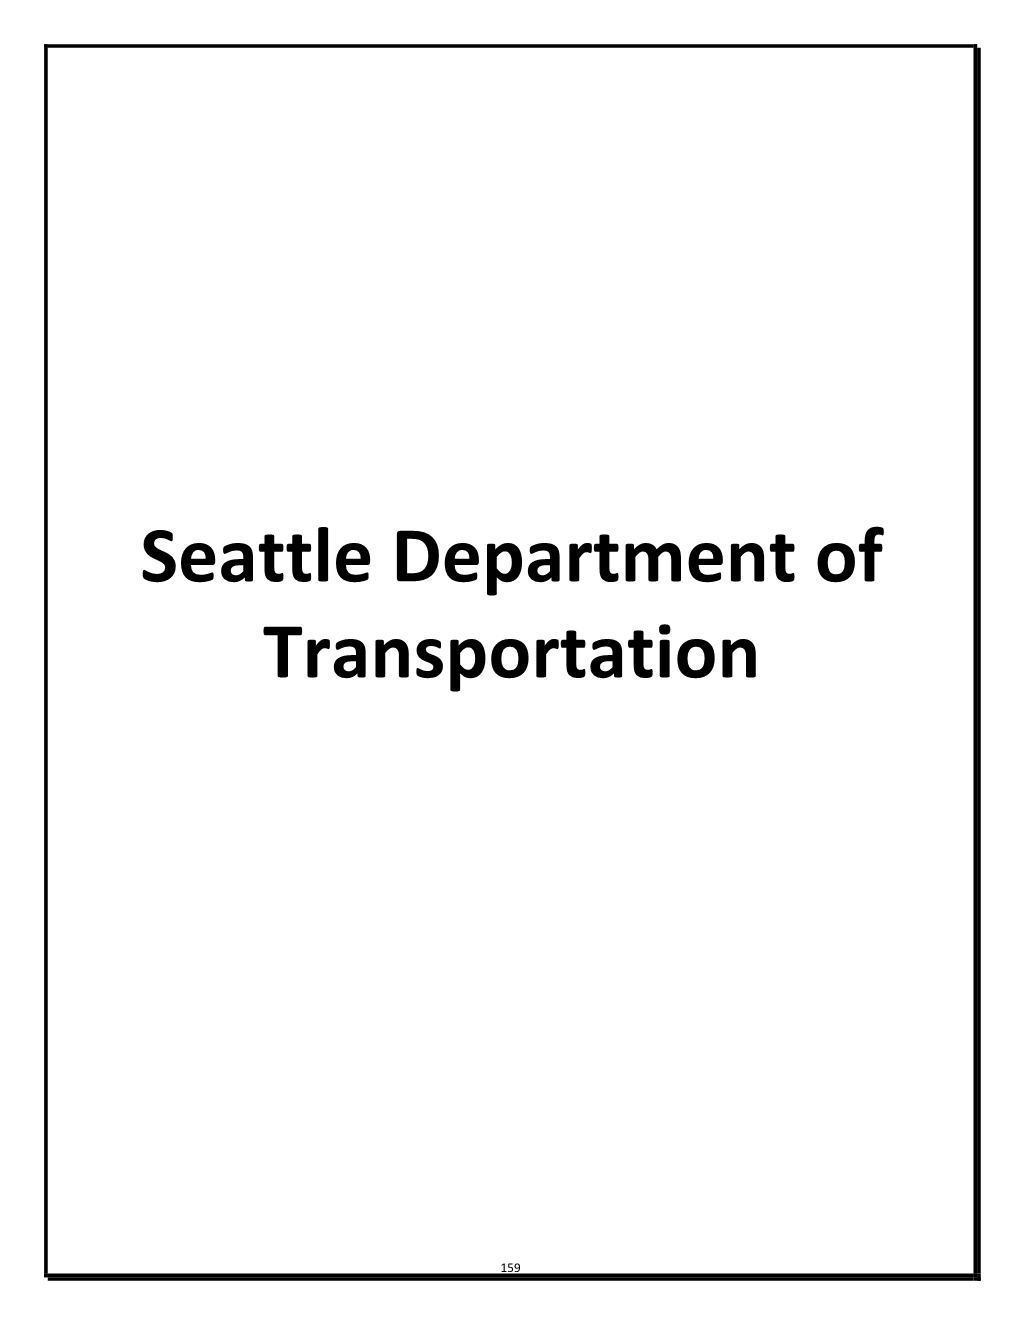 Seattle Department of Transportation